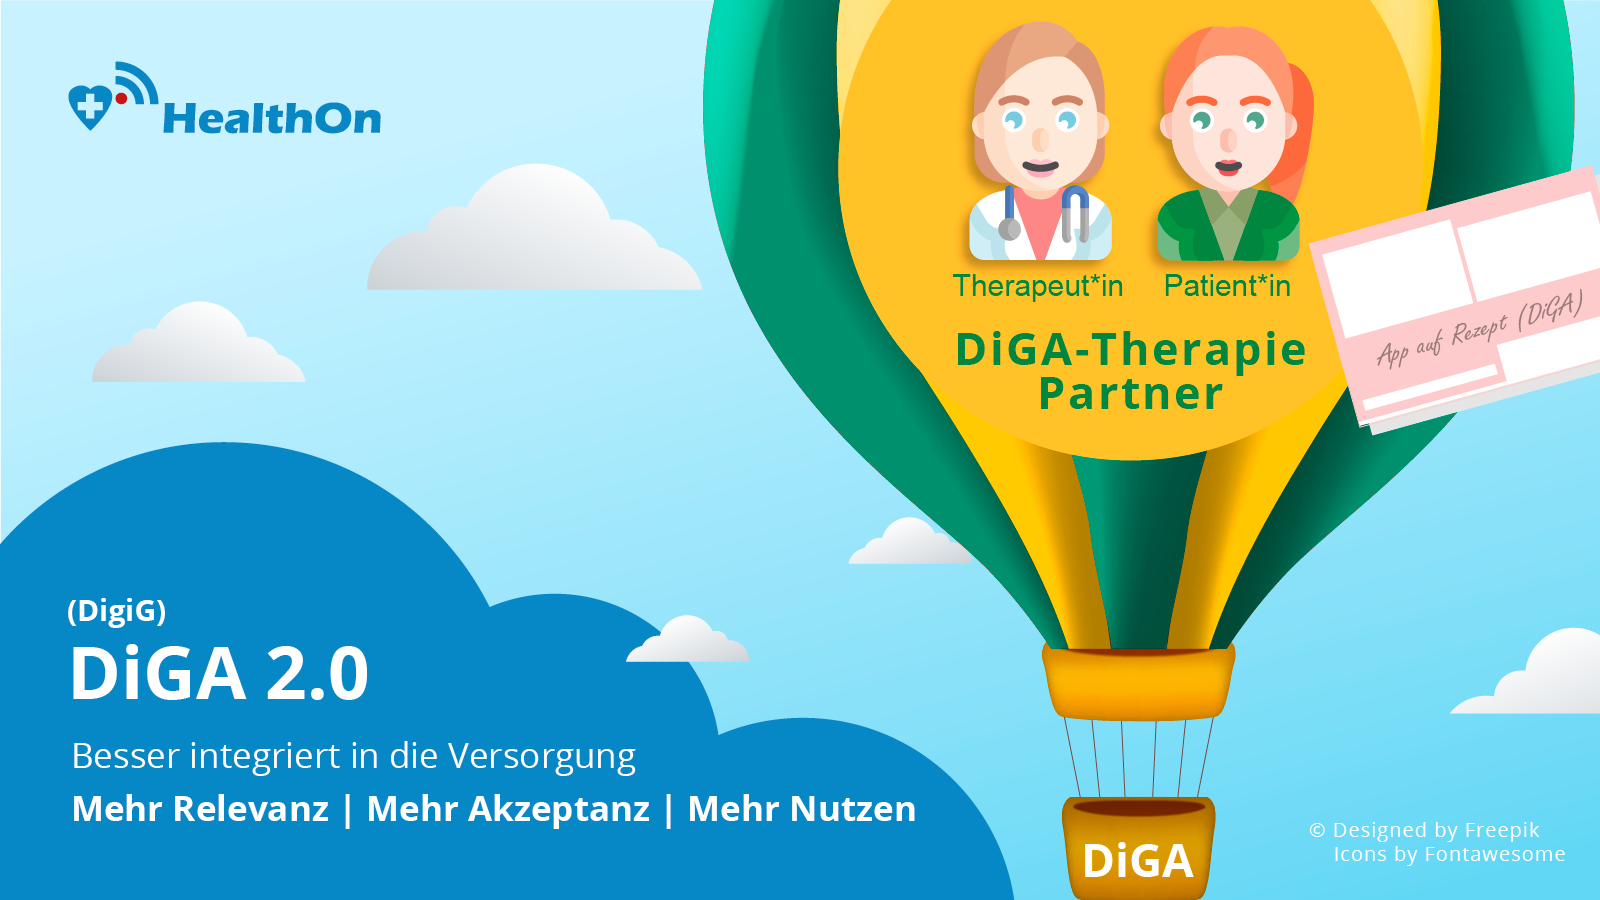 DiGA 2.0 - Kinderkrankheiten überwinden